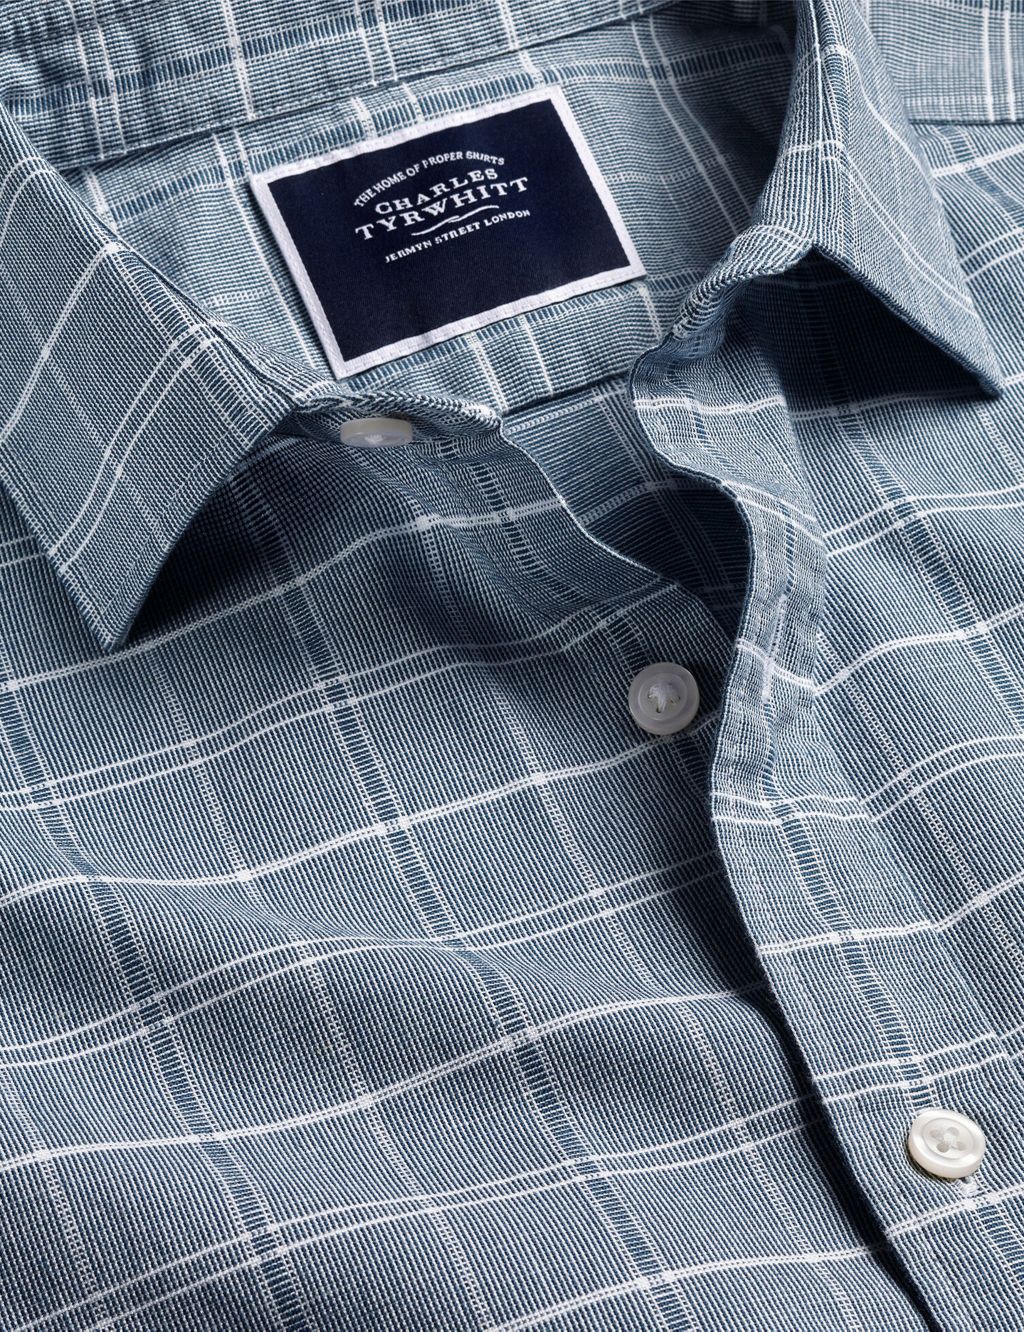 Slim Fit Cotton Rich Check Oxford Shirt | Charles Tyrwhitt | M&S